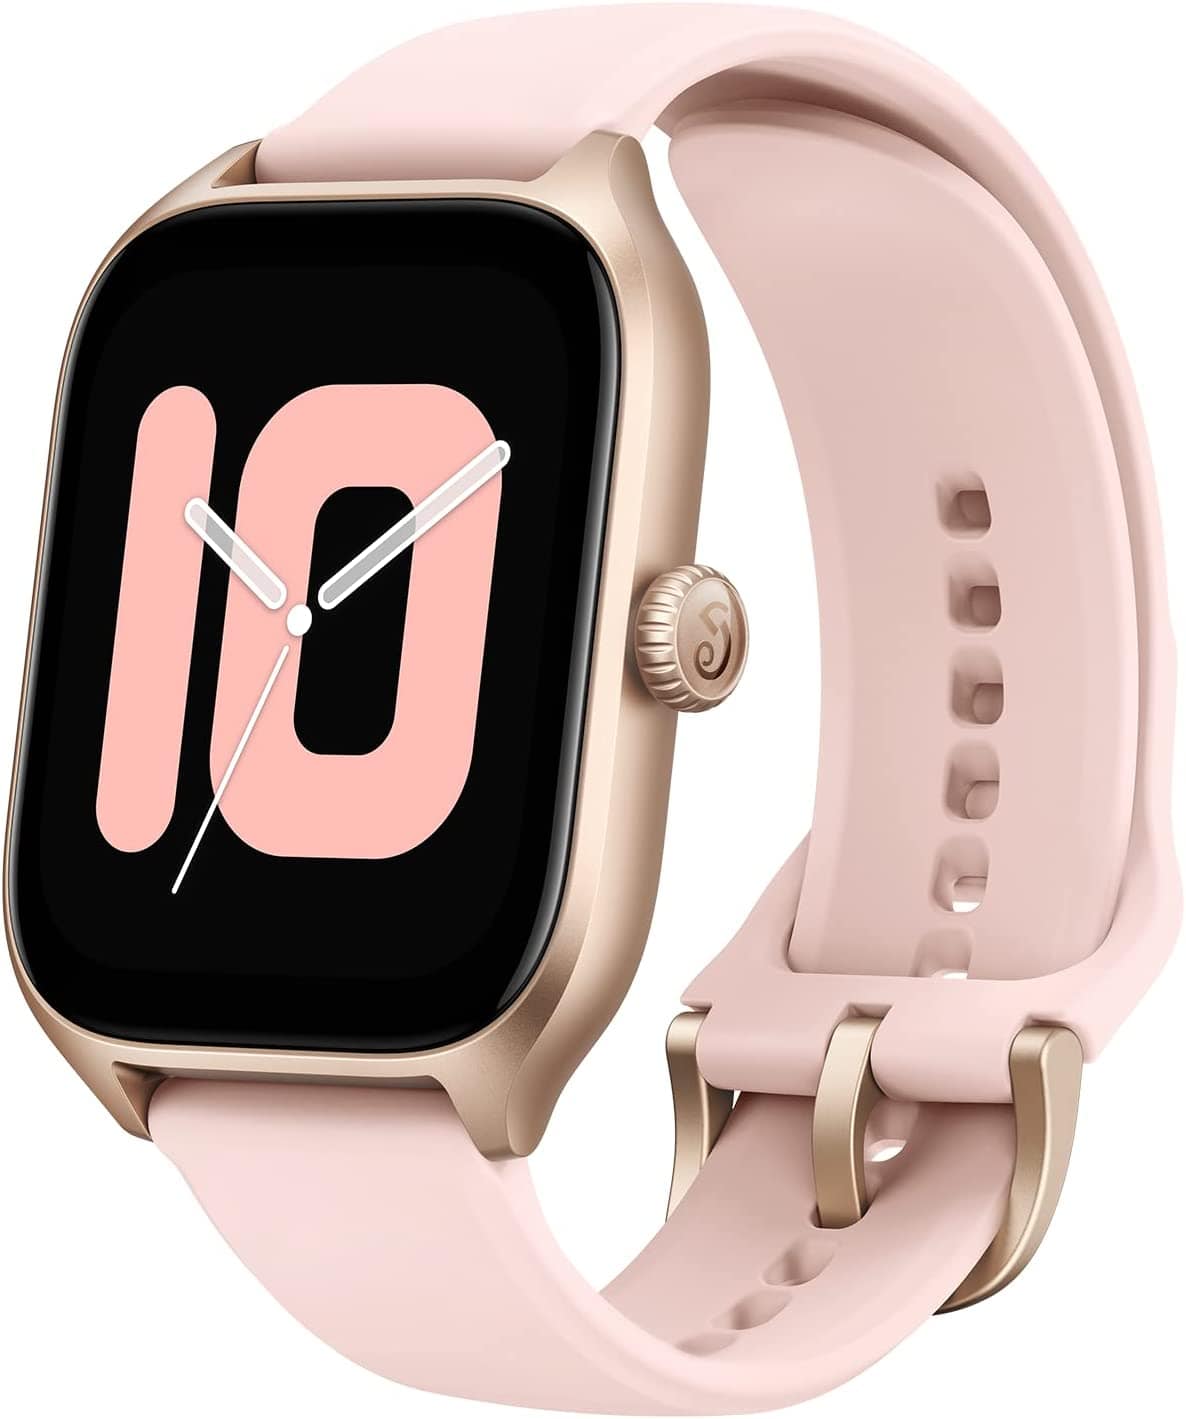 SmartTechShopping Smart Watches Rosebud Pink Amazfit GTS 4 Smart Watch for Women